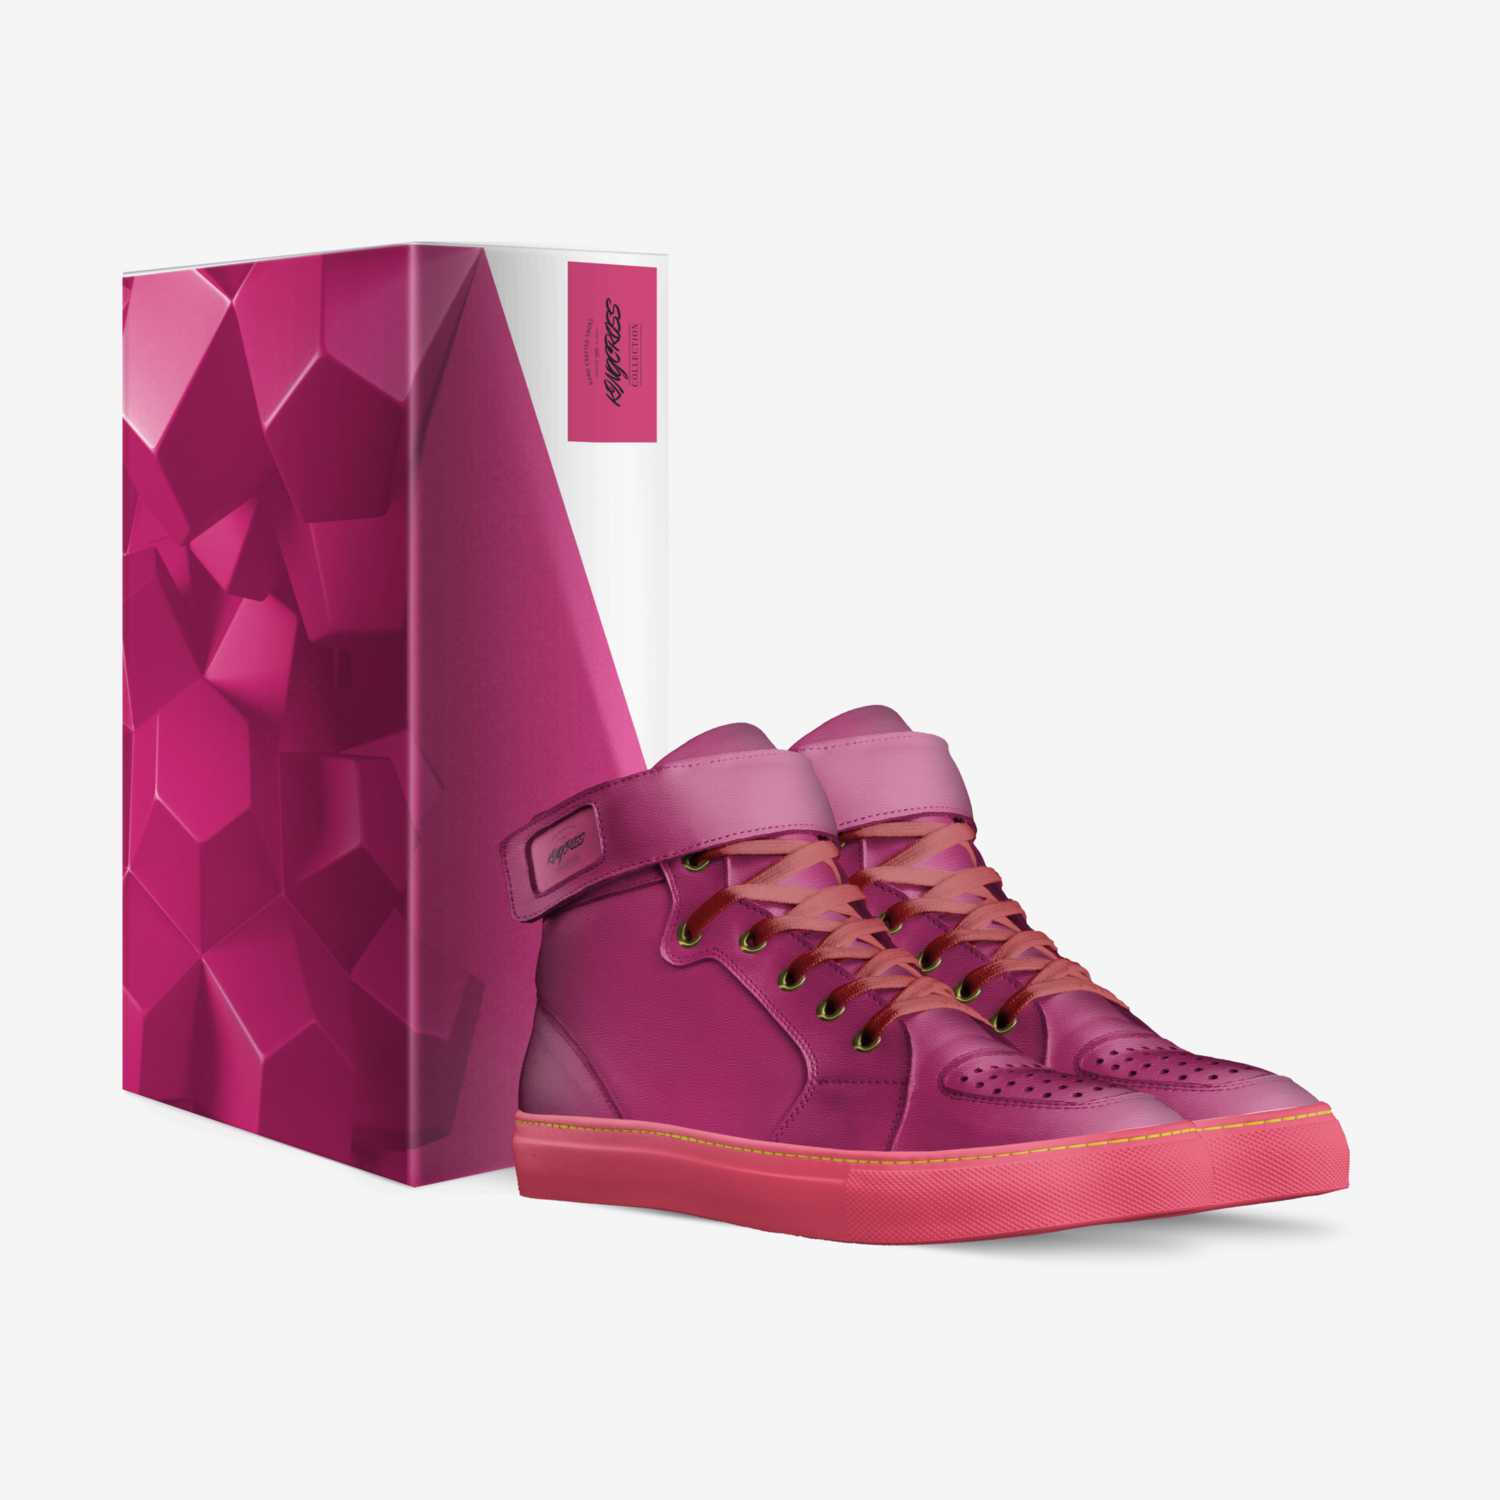 KINGCROSS custom made in Italy shoes by Shaun Stephenson | Box view